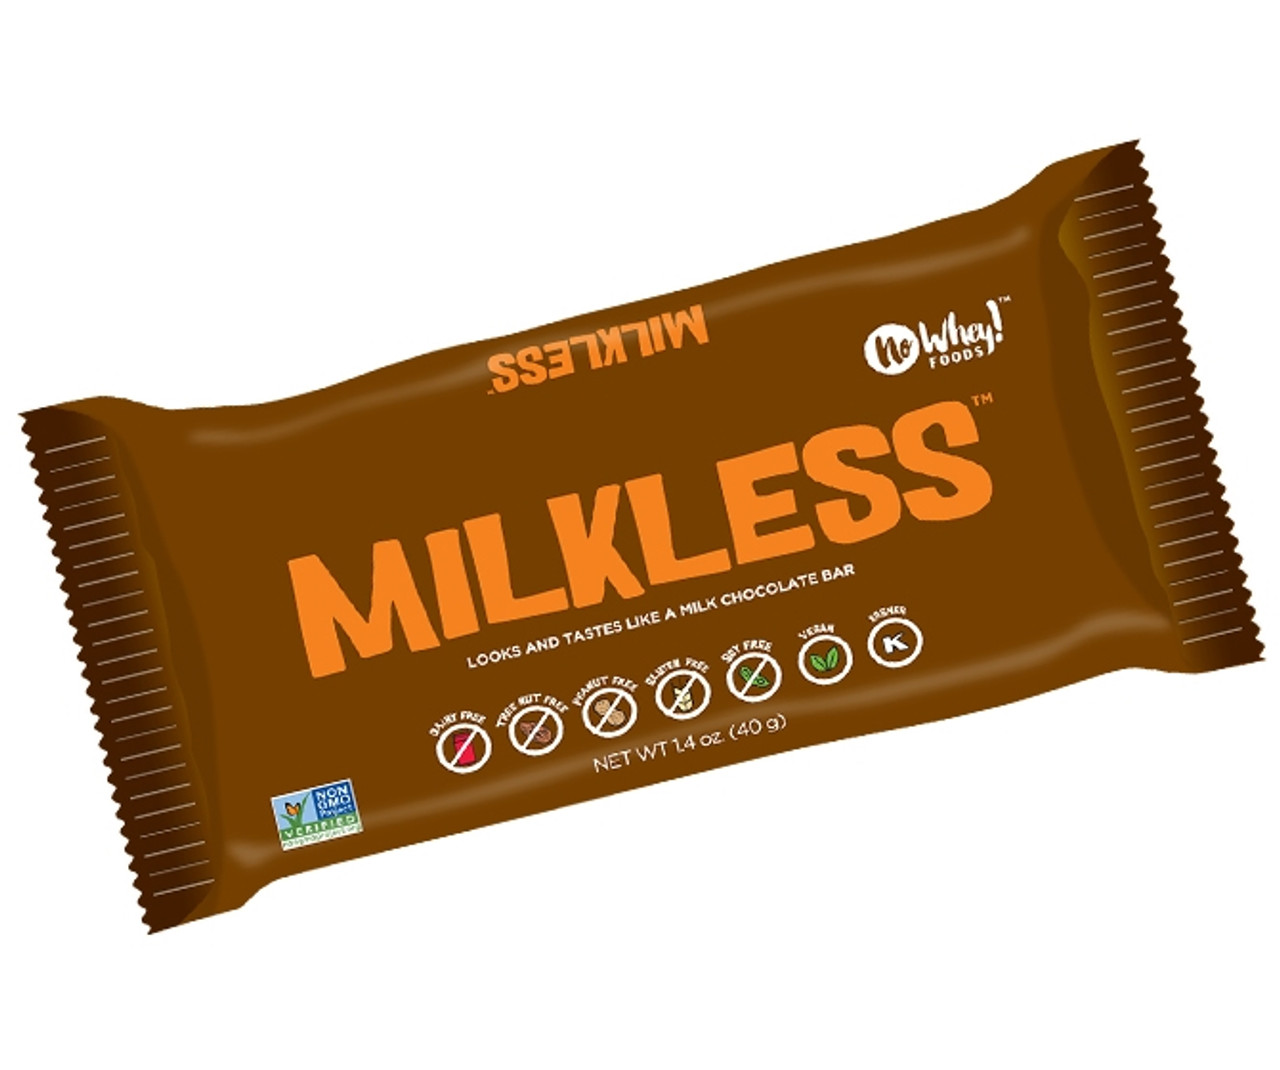 No Whey Milkless Chocolate Bar